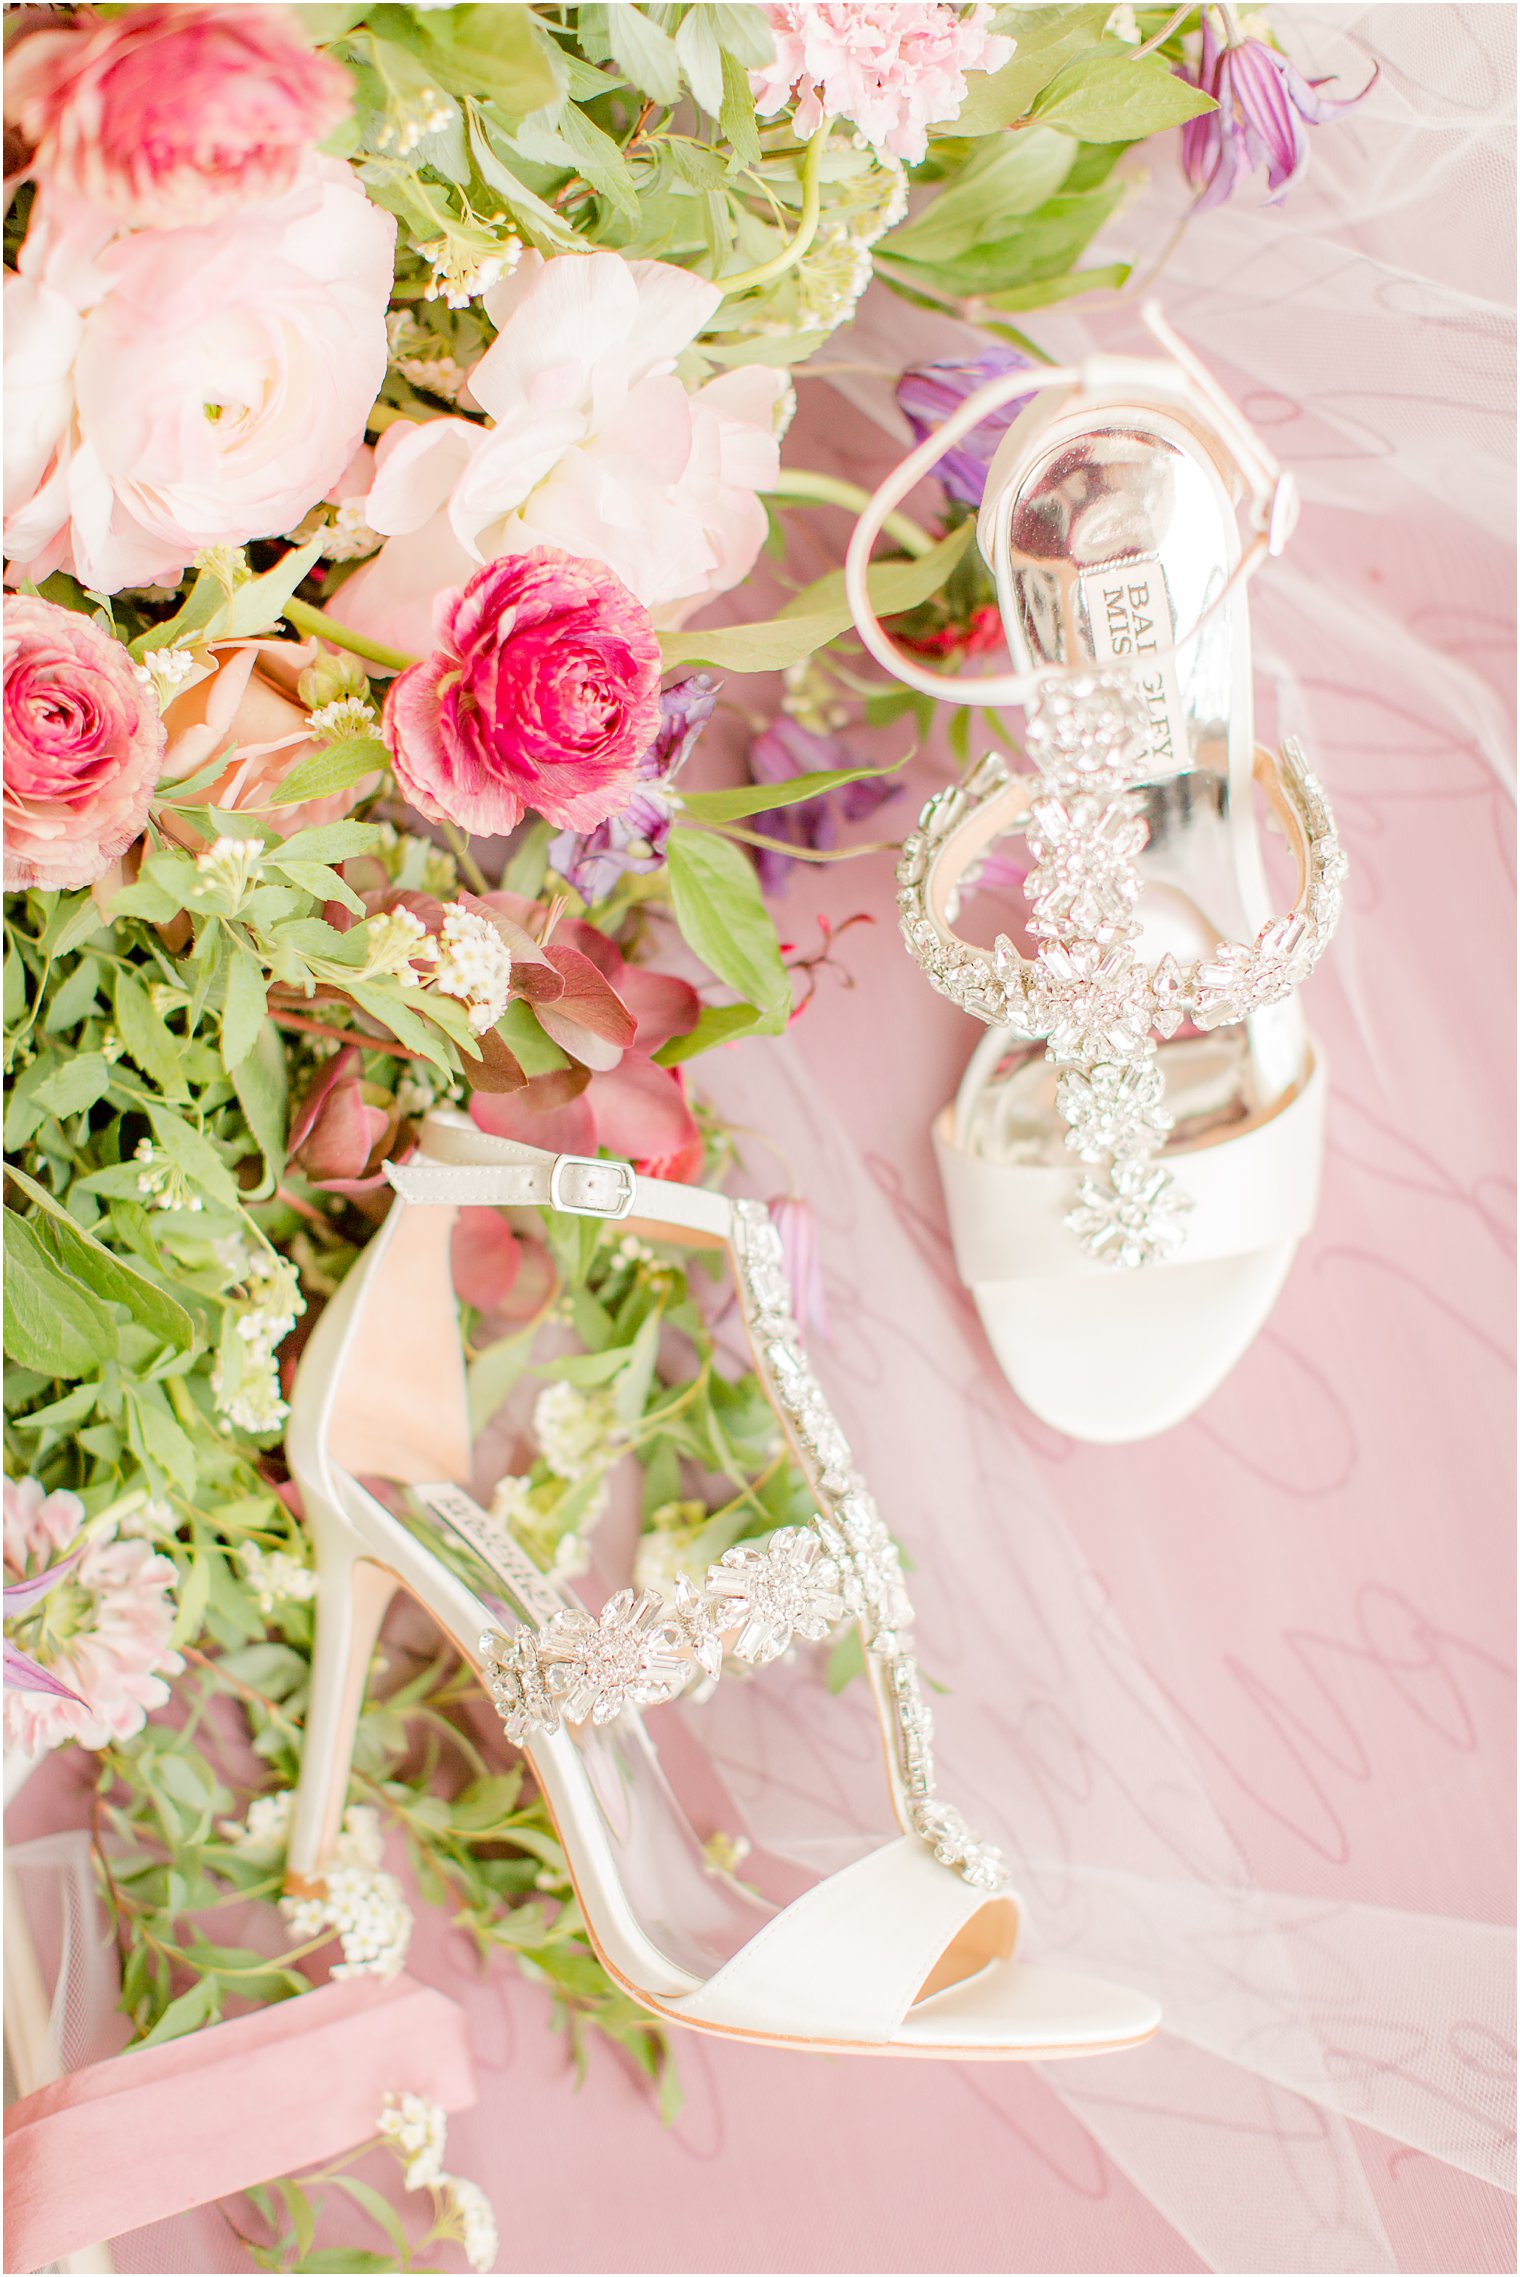 JOPStudios LV groom wedding shoes ideas